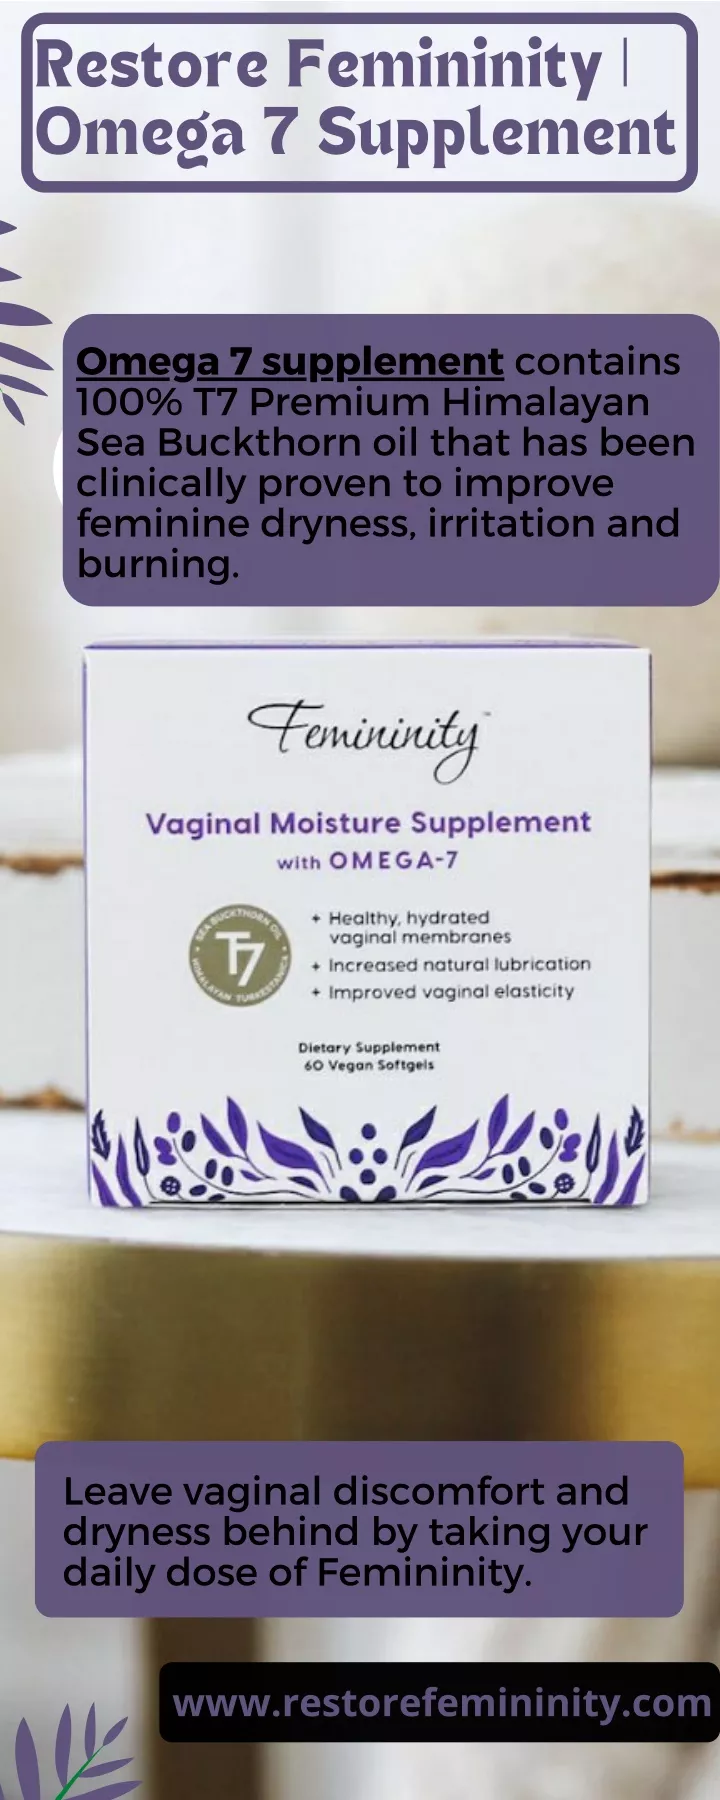 restore femininity omega 7 supplement